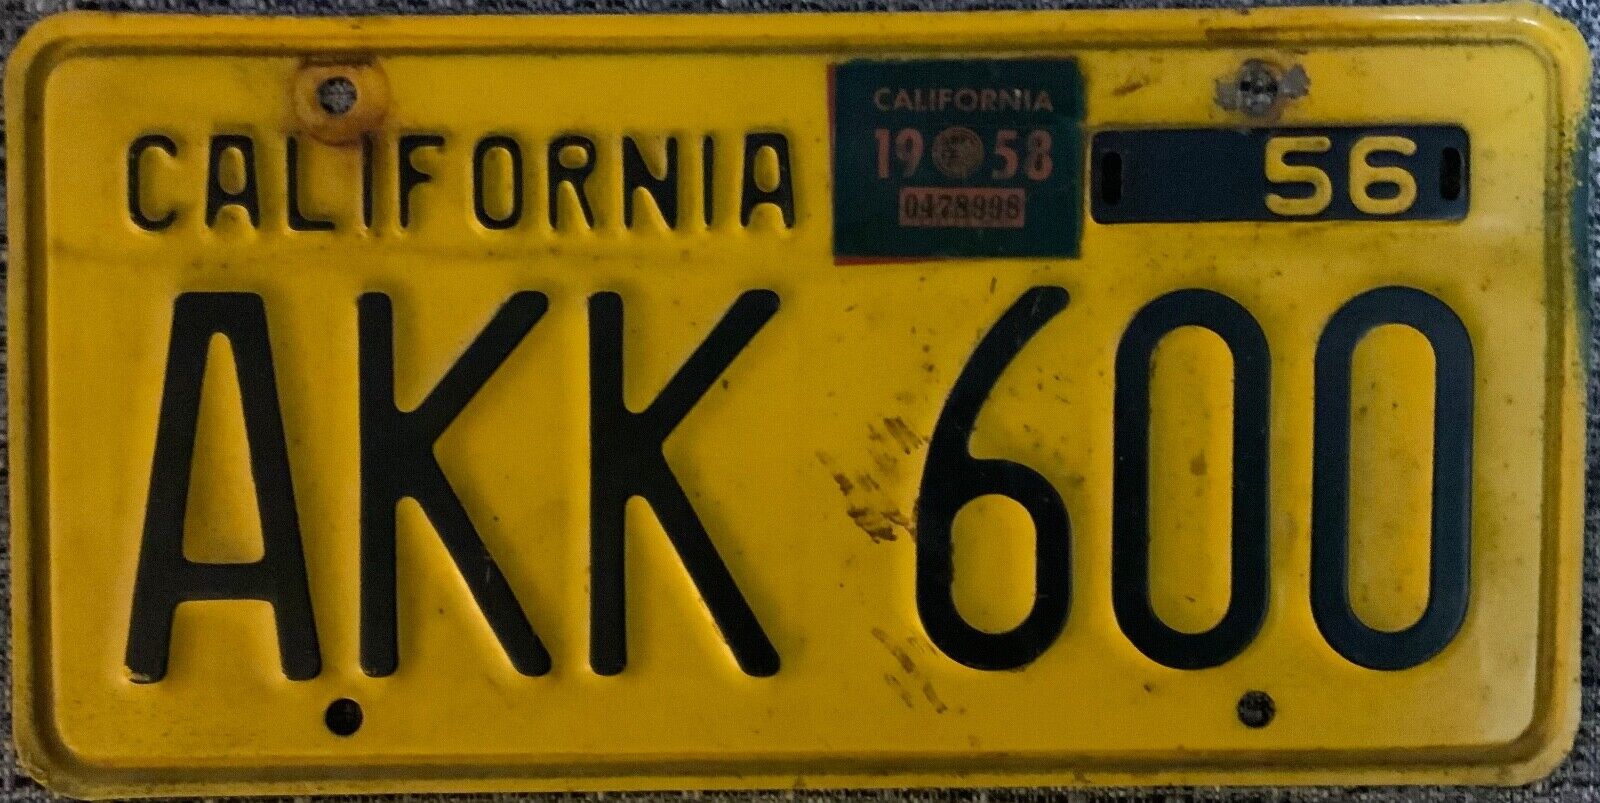 VARIOUS PLATE NUMBERS 1956 base California passenger yellow black license plate